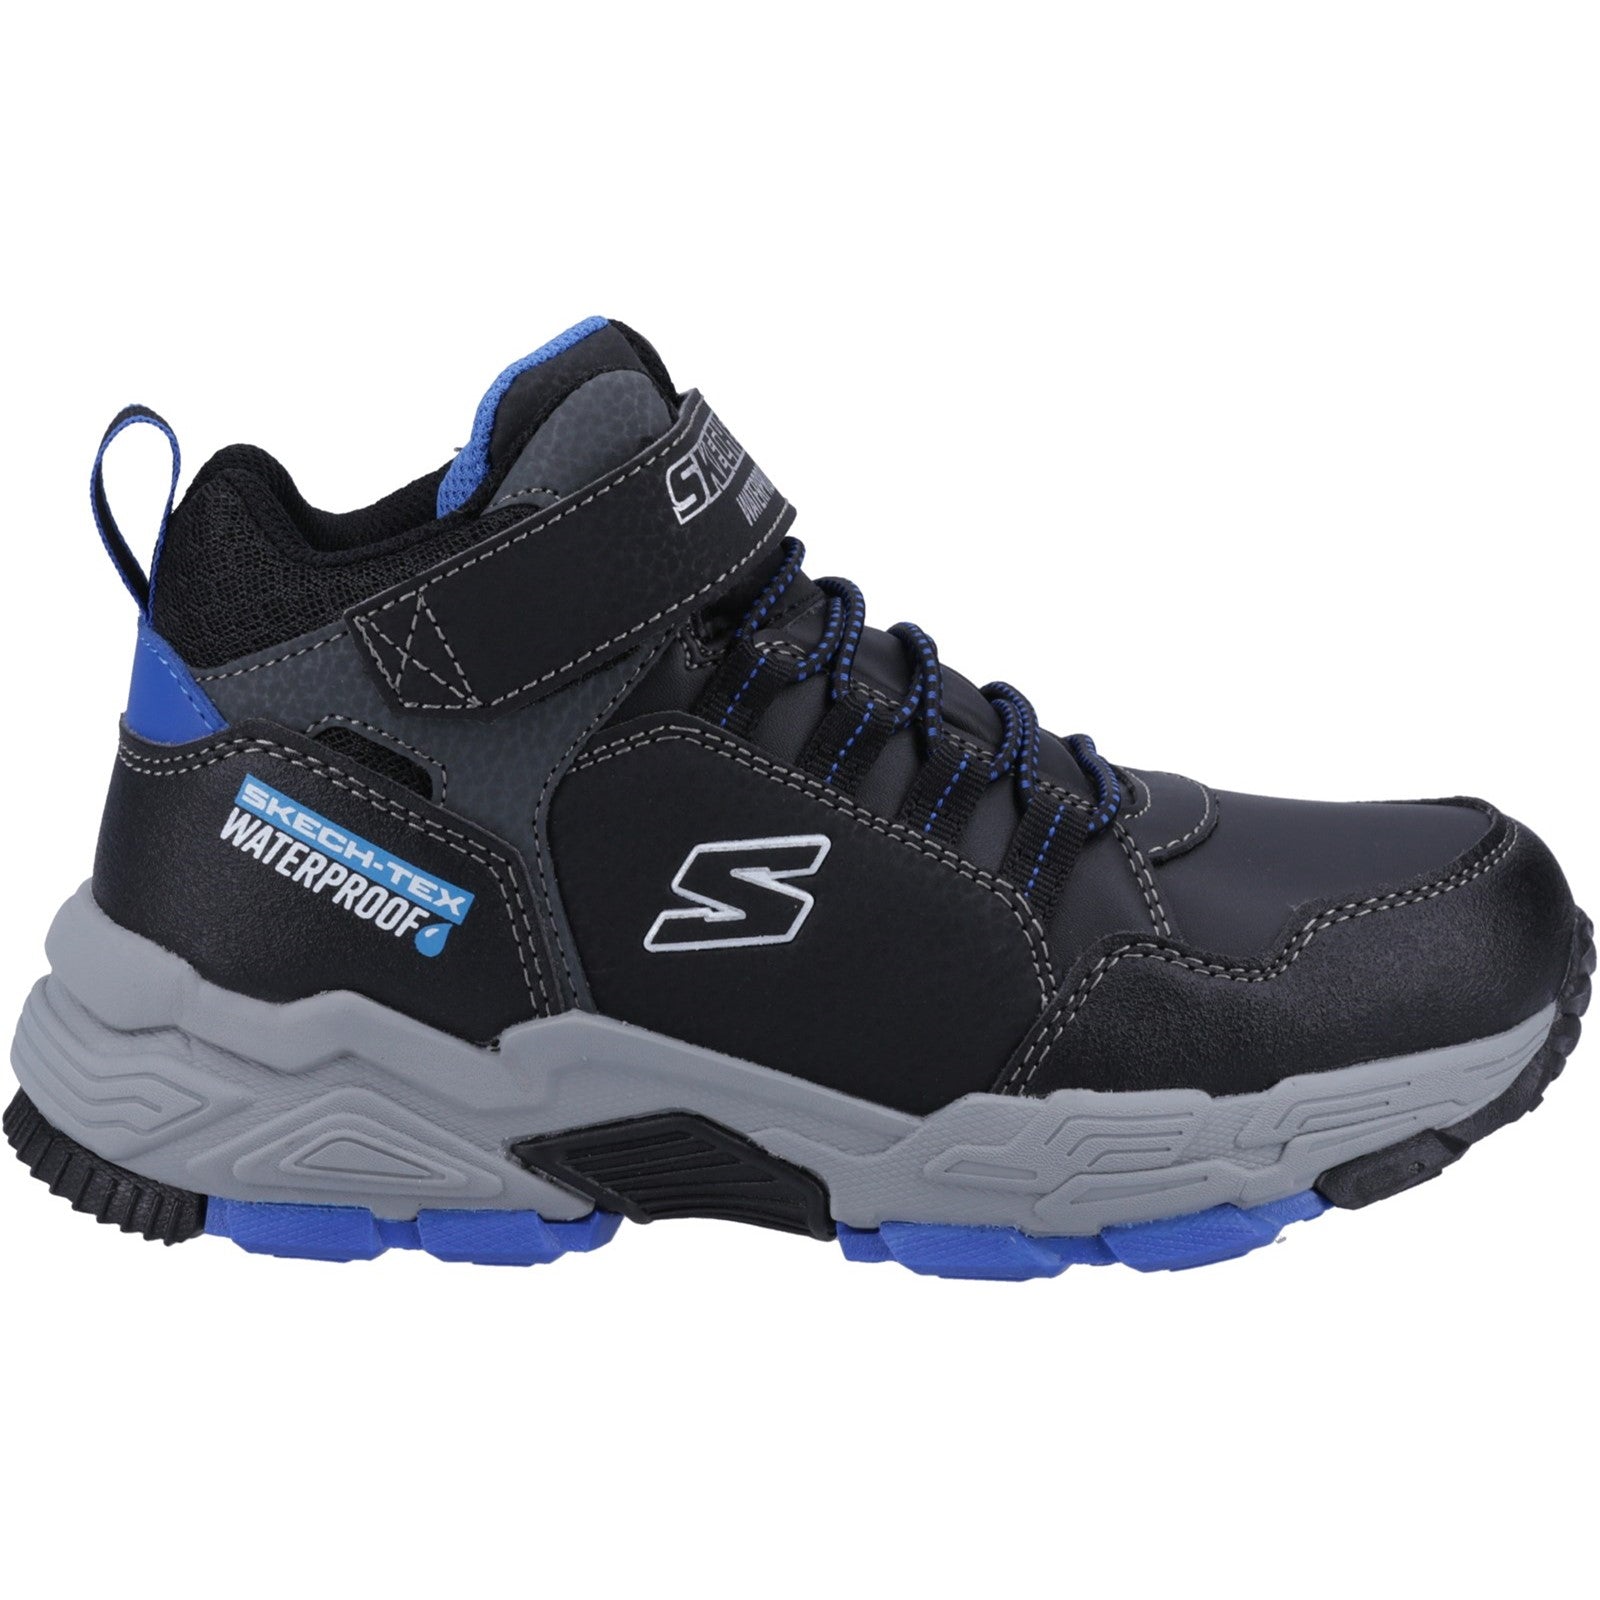 Skechers Boys Drollix Hiking Boots - Black